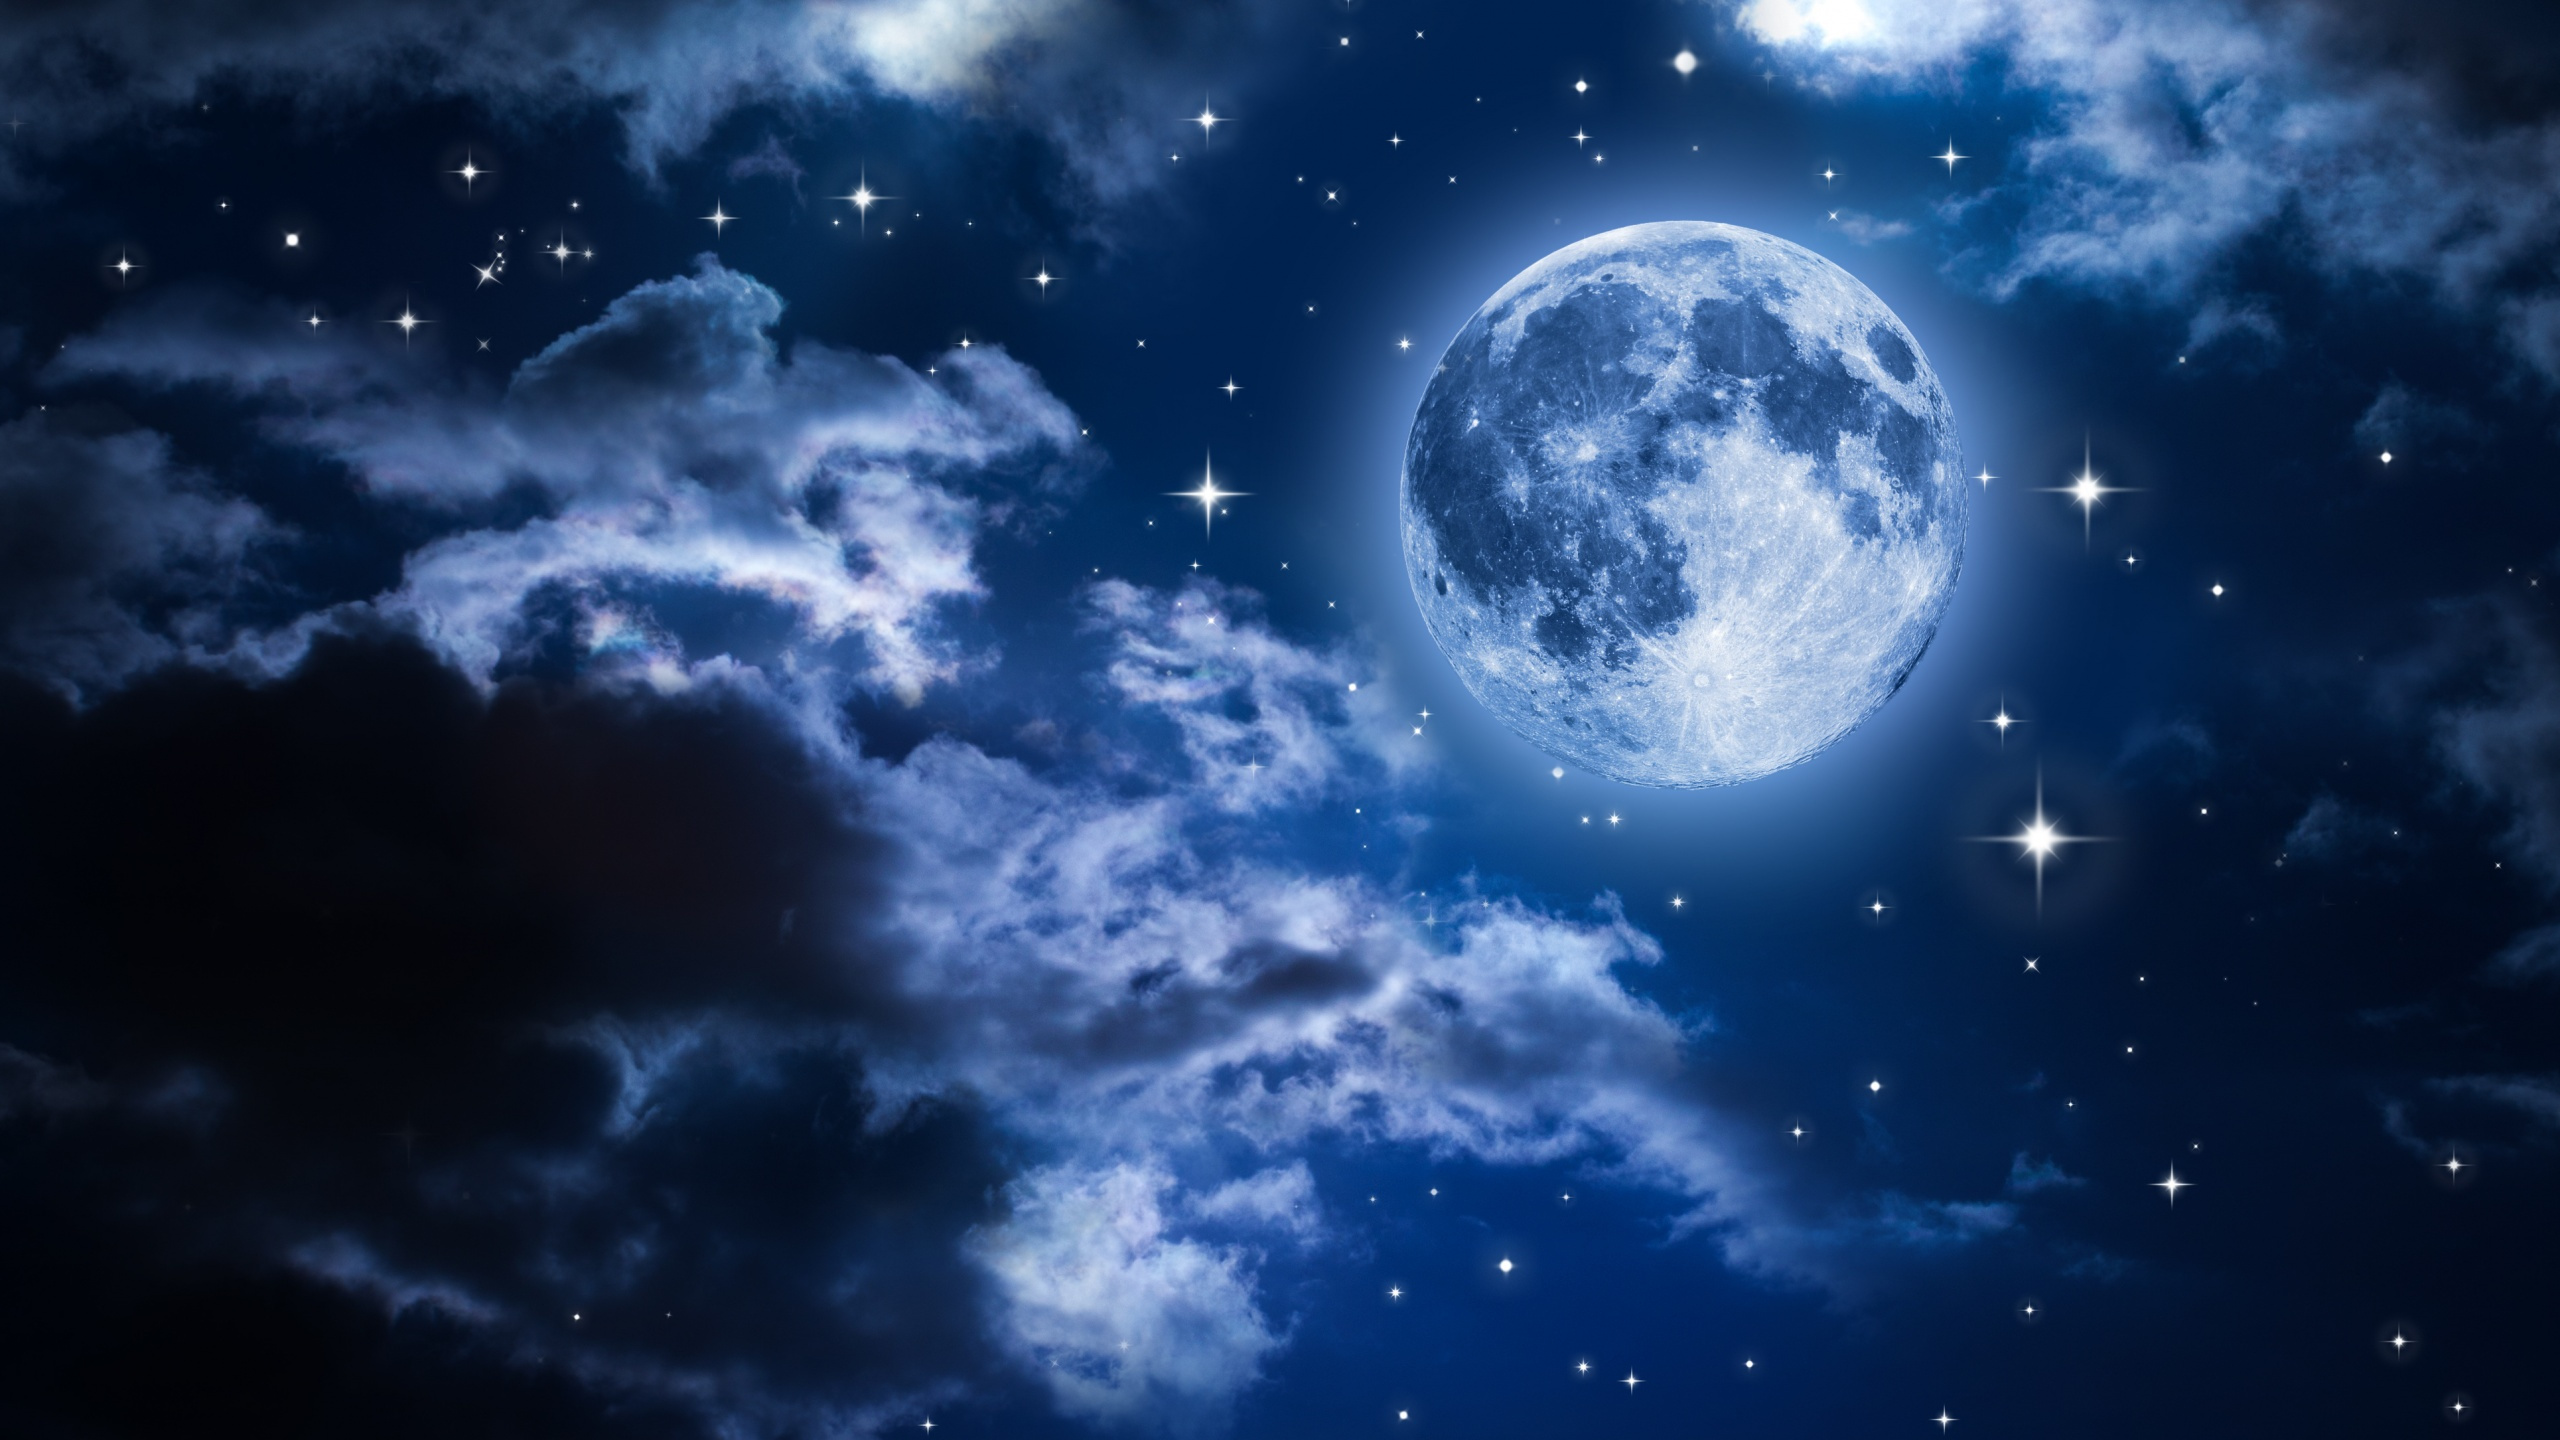 Фон рабочего стола где видно beautiful moon in the sky, Space, stars,  clouds, космос, звезды, облака, красивая луна, небо